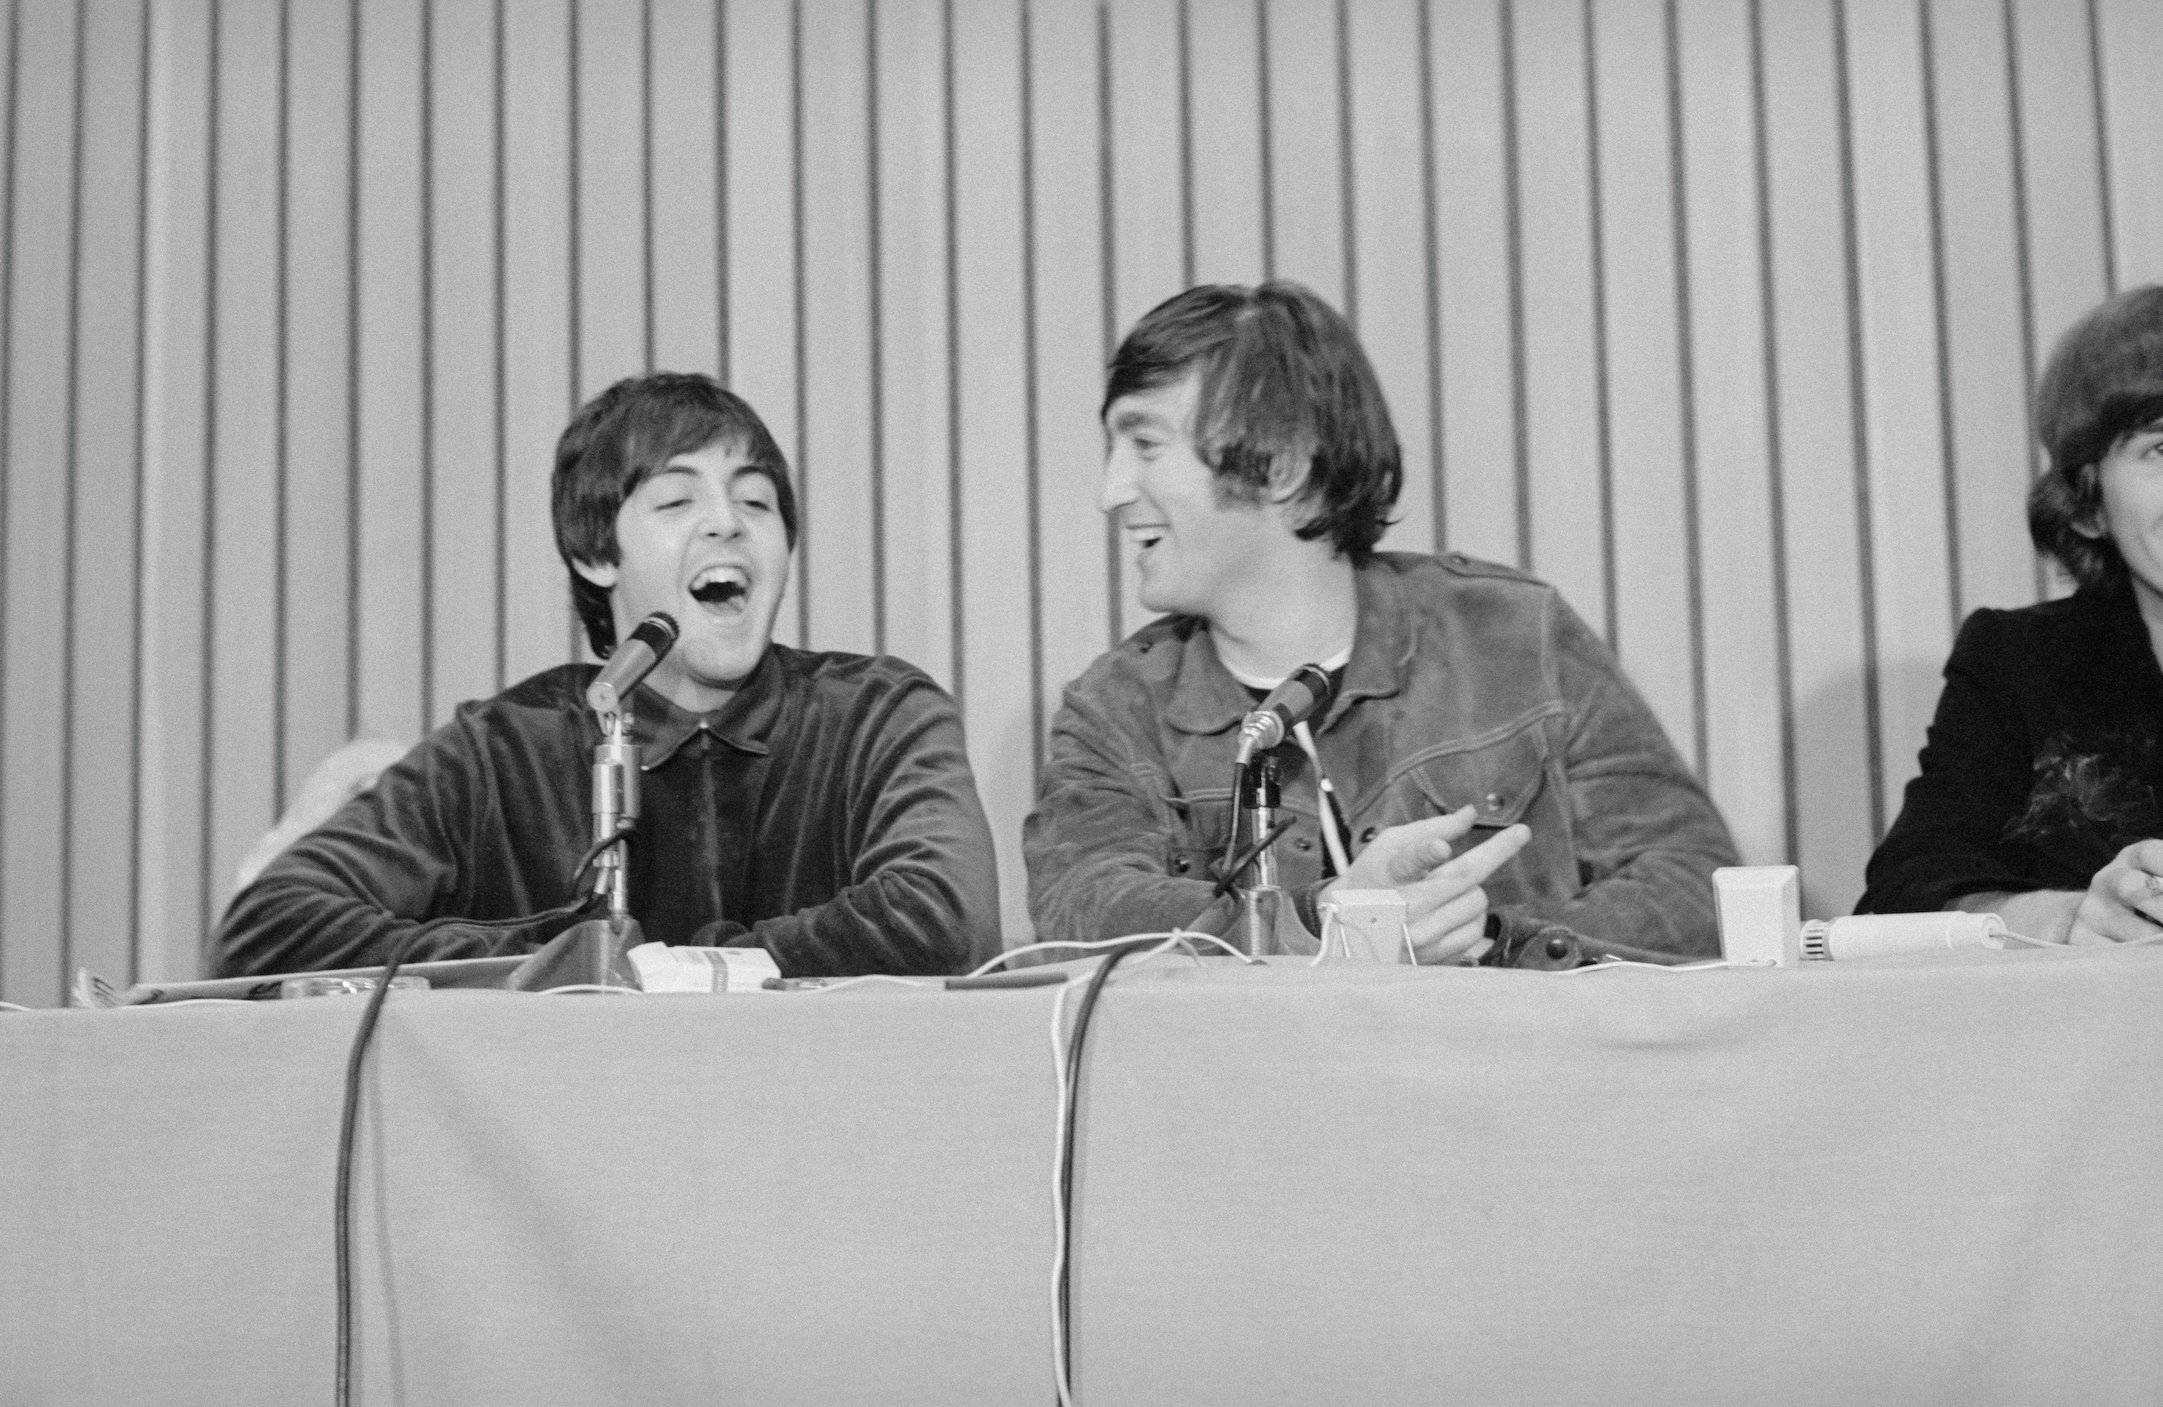 John Lennon and Paul McCartney attend a press conference 